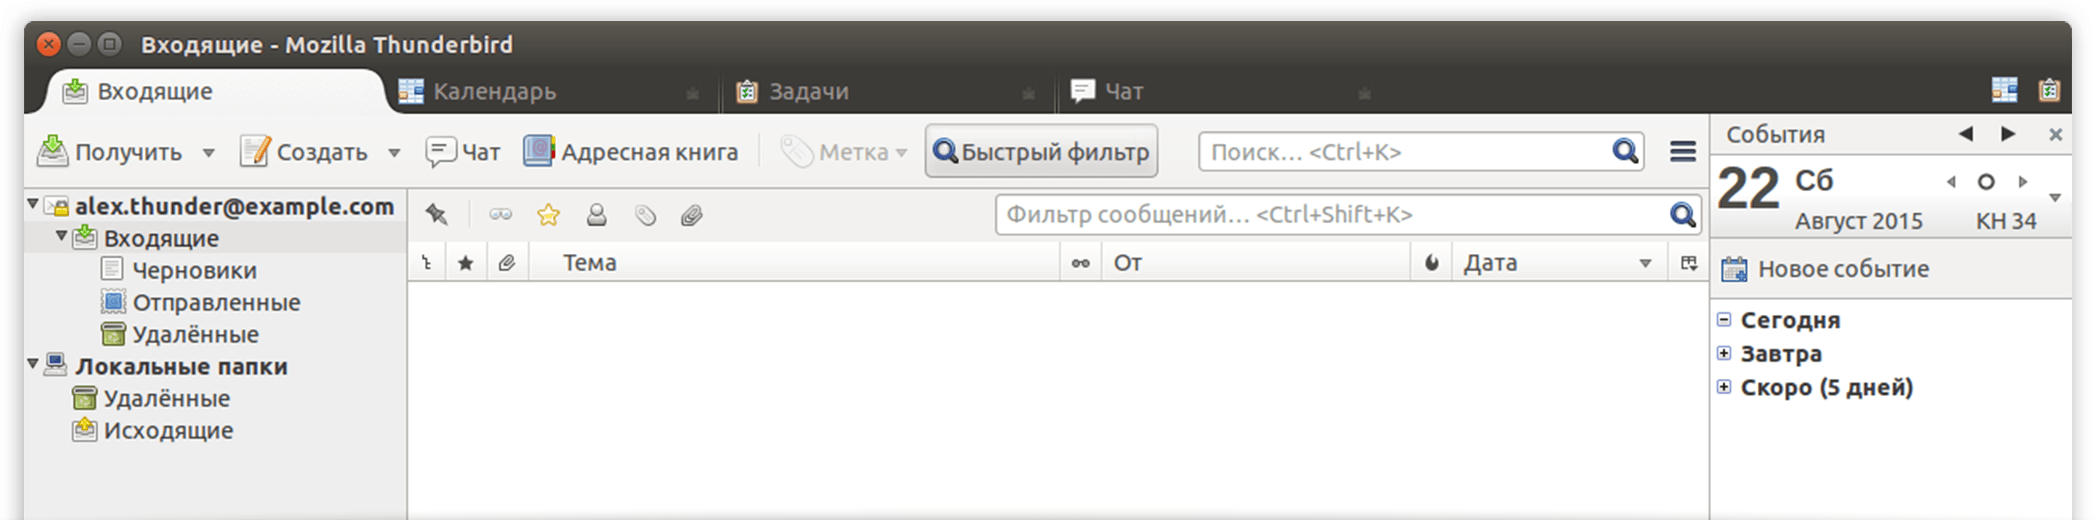 Messages inbox. Mozilla Thunderbird Скриншоты. Тандерберд Интерфейс. Linux почтовый клиент для Exchange. Thunderbird меню.